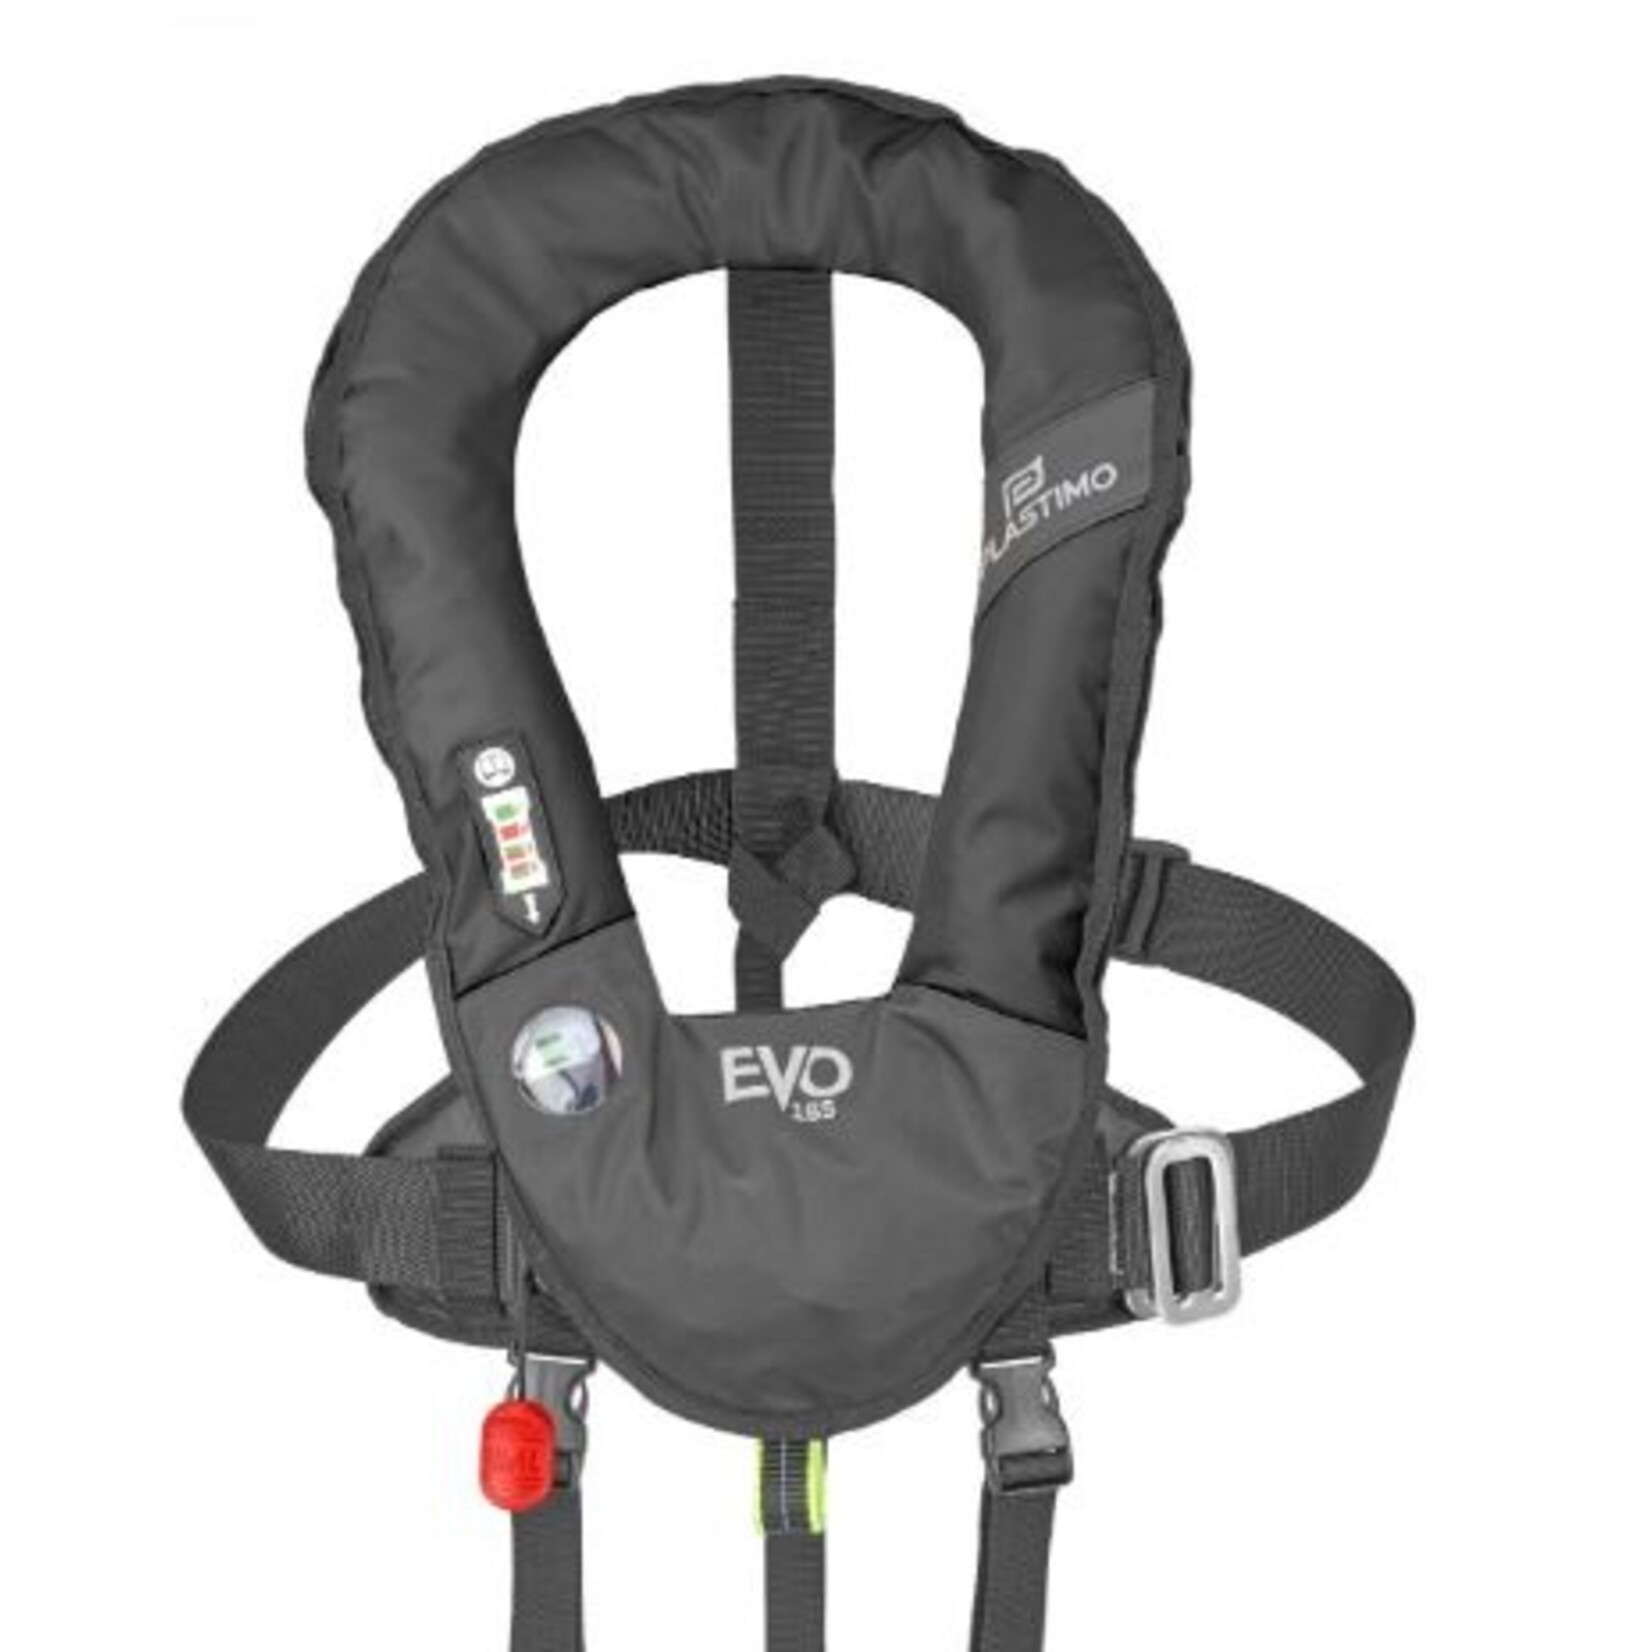 Plastimo Evo 165 ii auto ps black with harness.